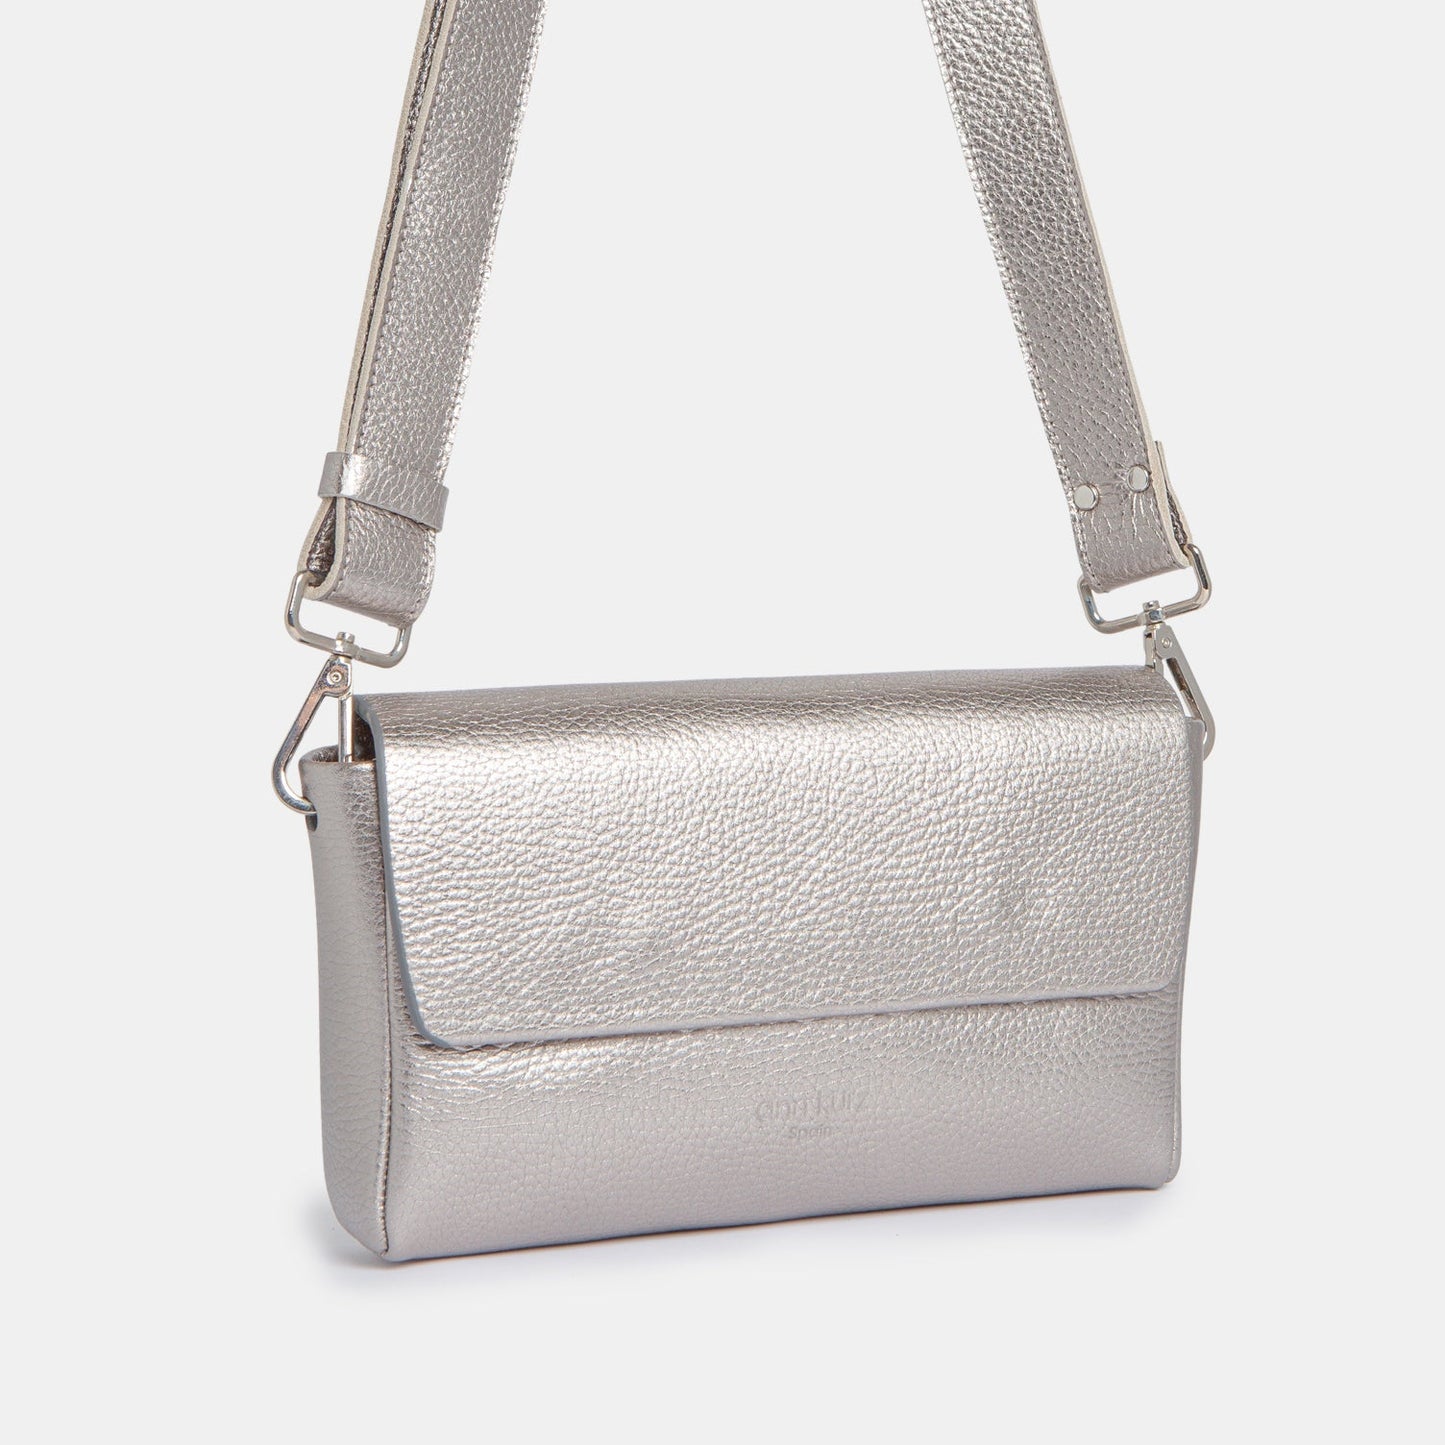 ann kurz Pack Shape Bag | Metallic Collection